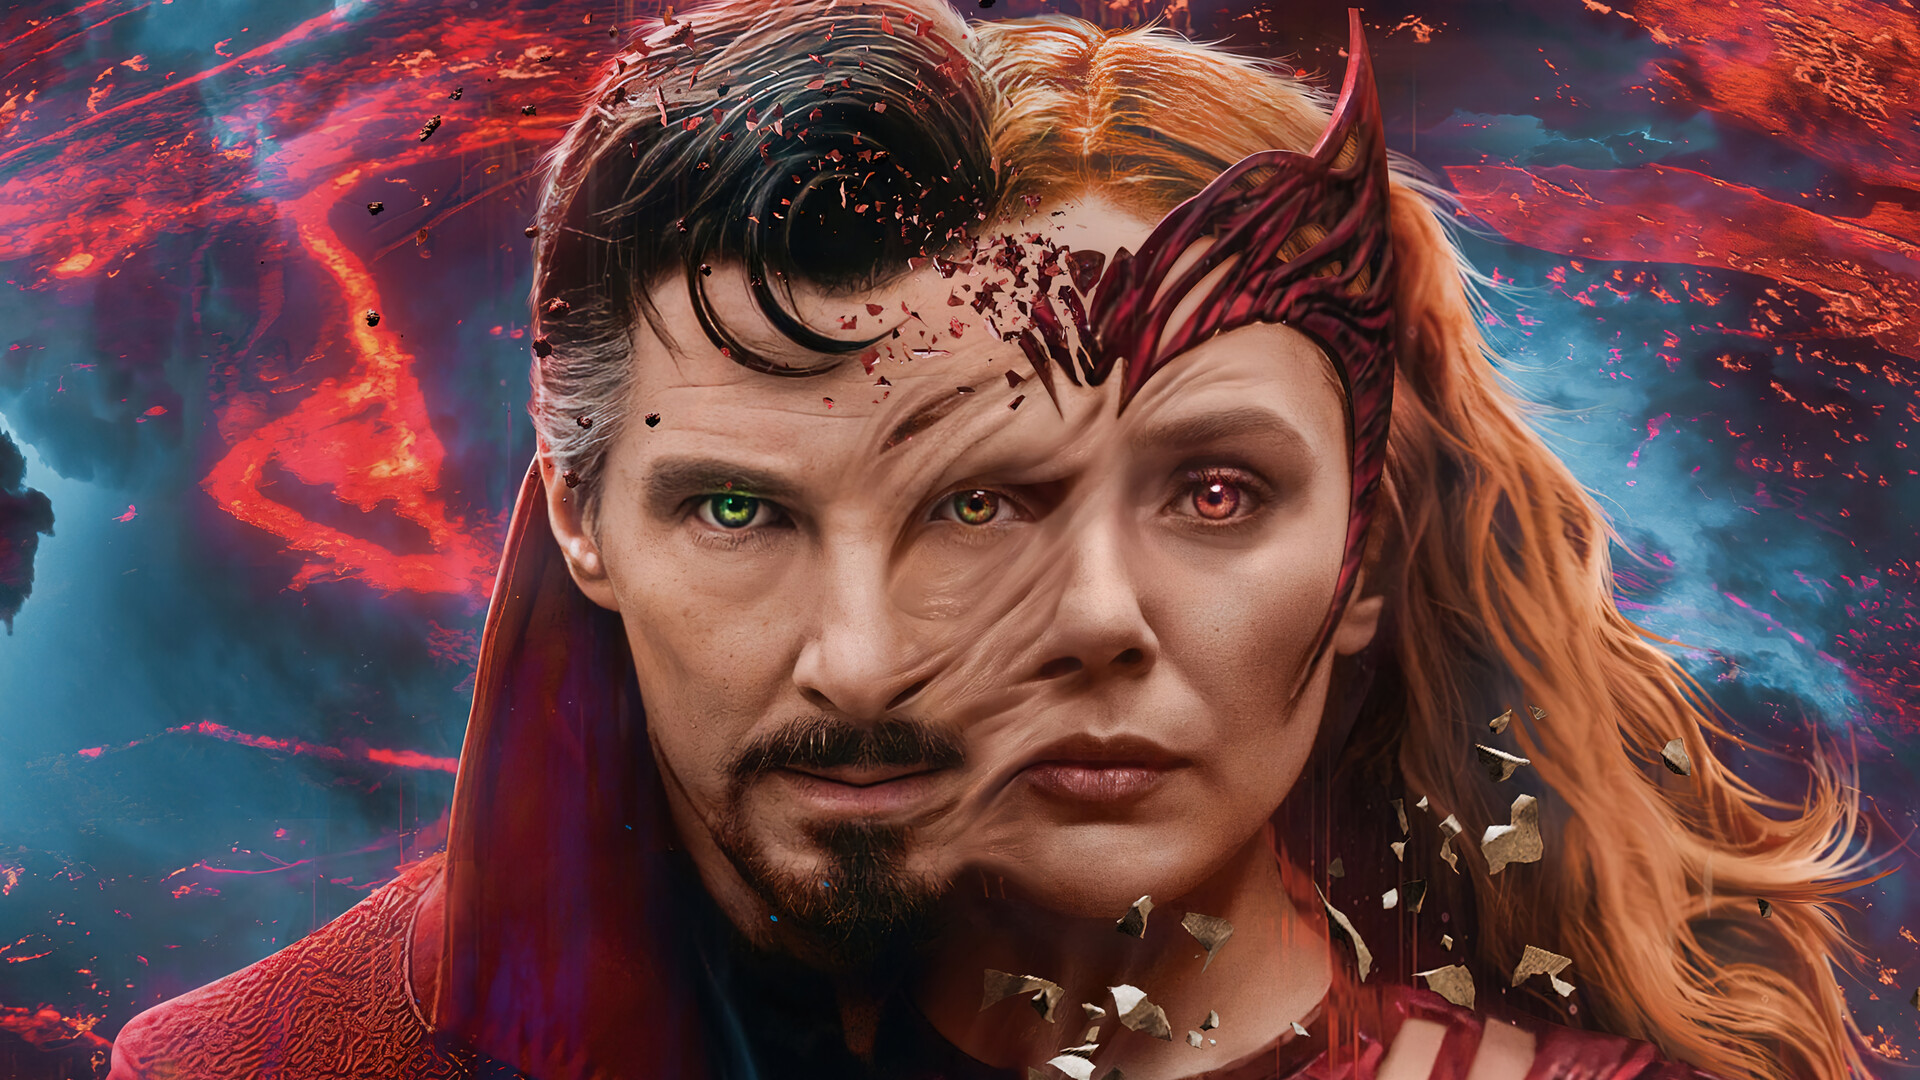 Wanda Doctor Strange In The Multiverse Of Madness 4k Wallpaper